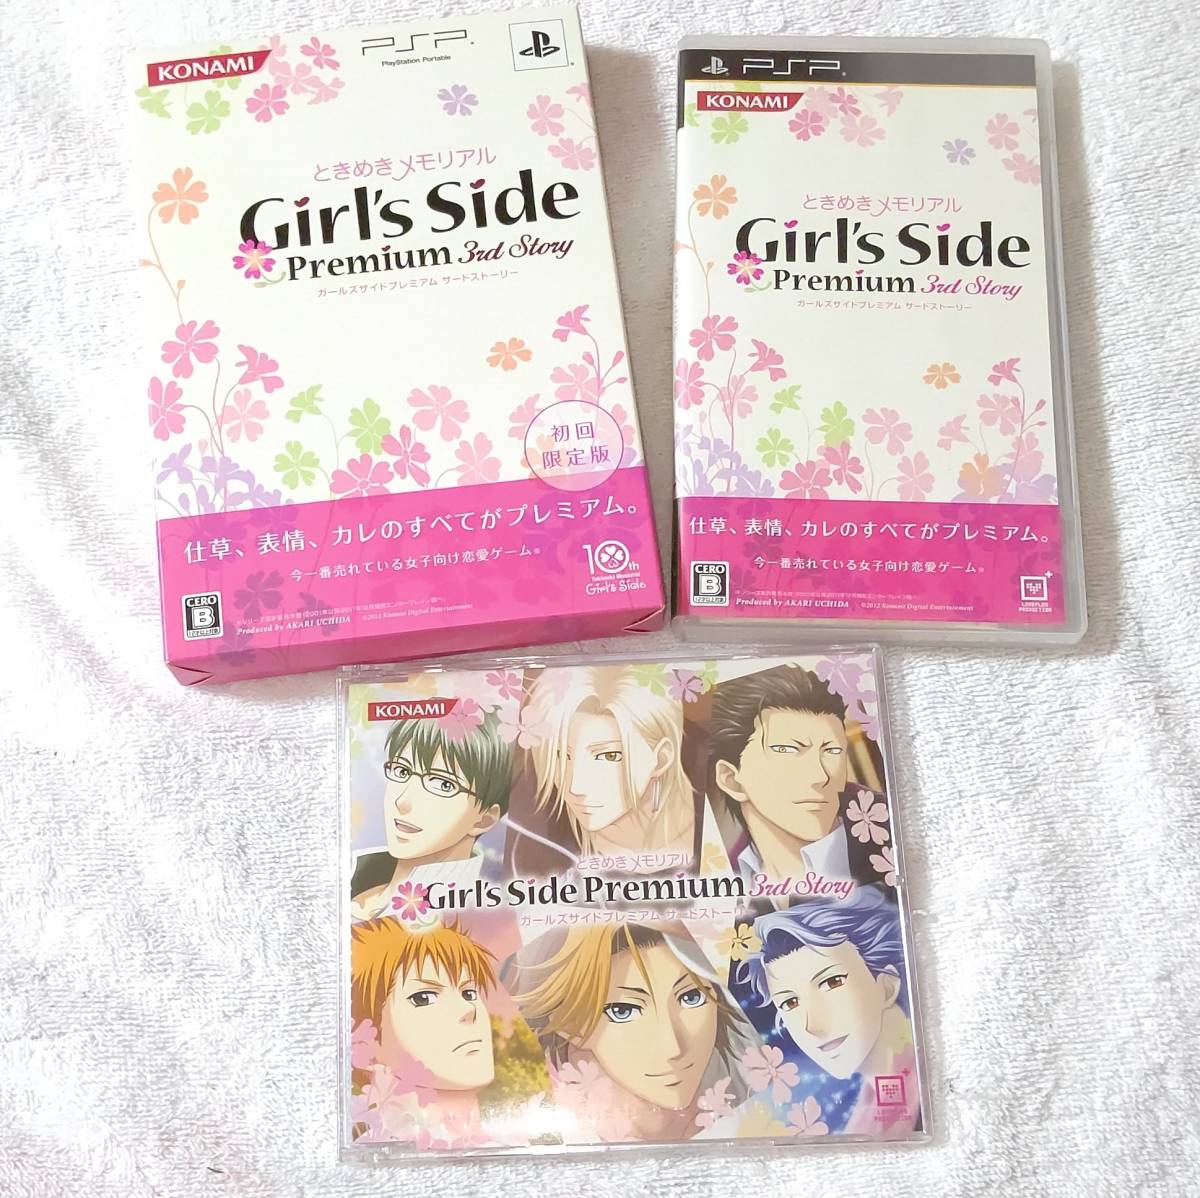 Cd Psp ゲームソフト ときめきメモリアル ときメモ Gs3 Girls Girl S Side Premium 3rd Story シミュレーション 売買されたオークション情報 Yahooの商品情報をアーカイブ公開 オークファン Aucfan Com